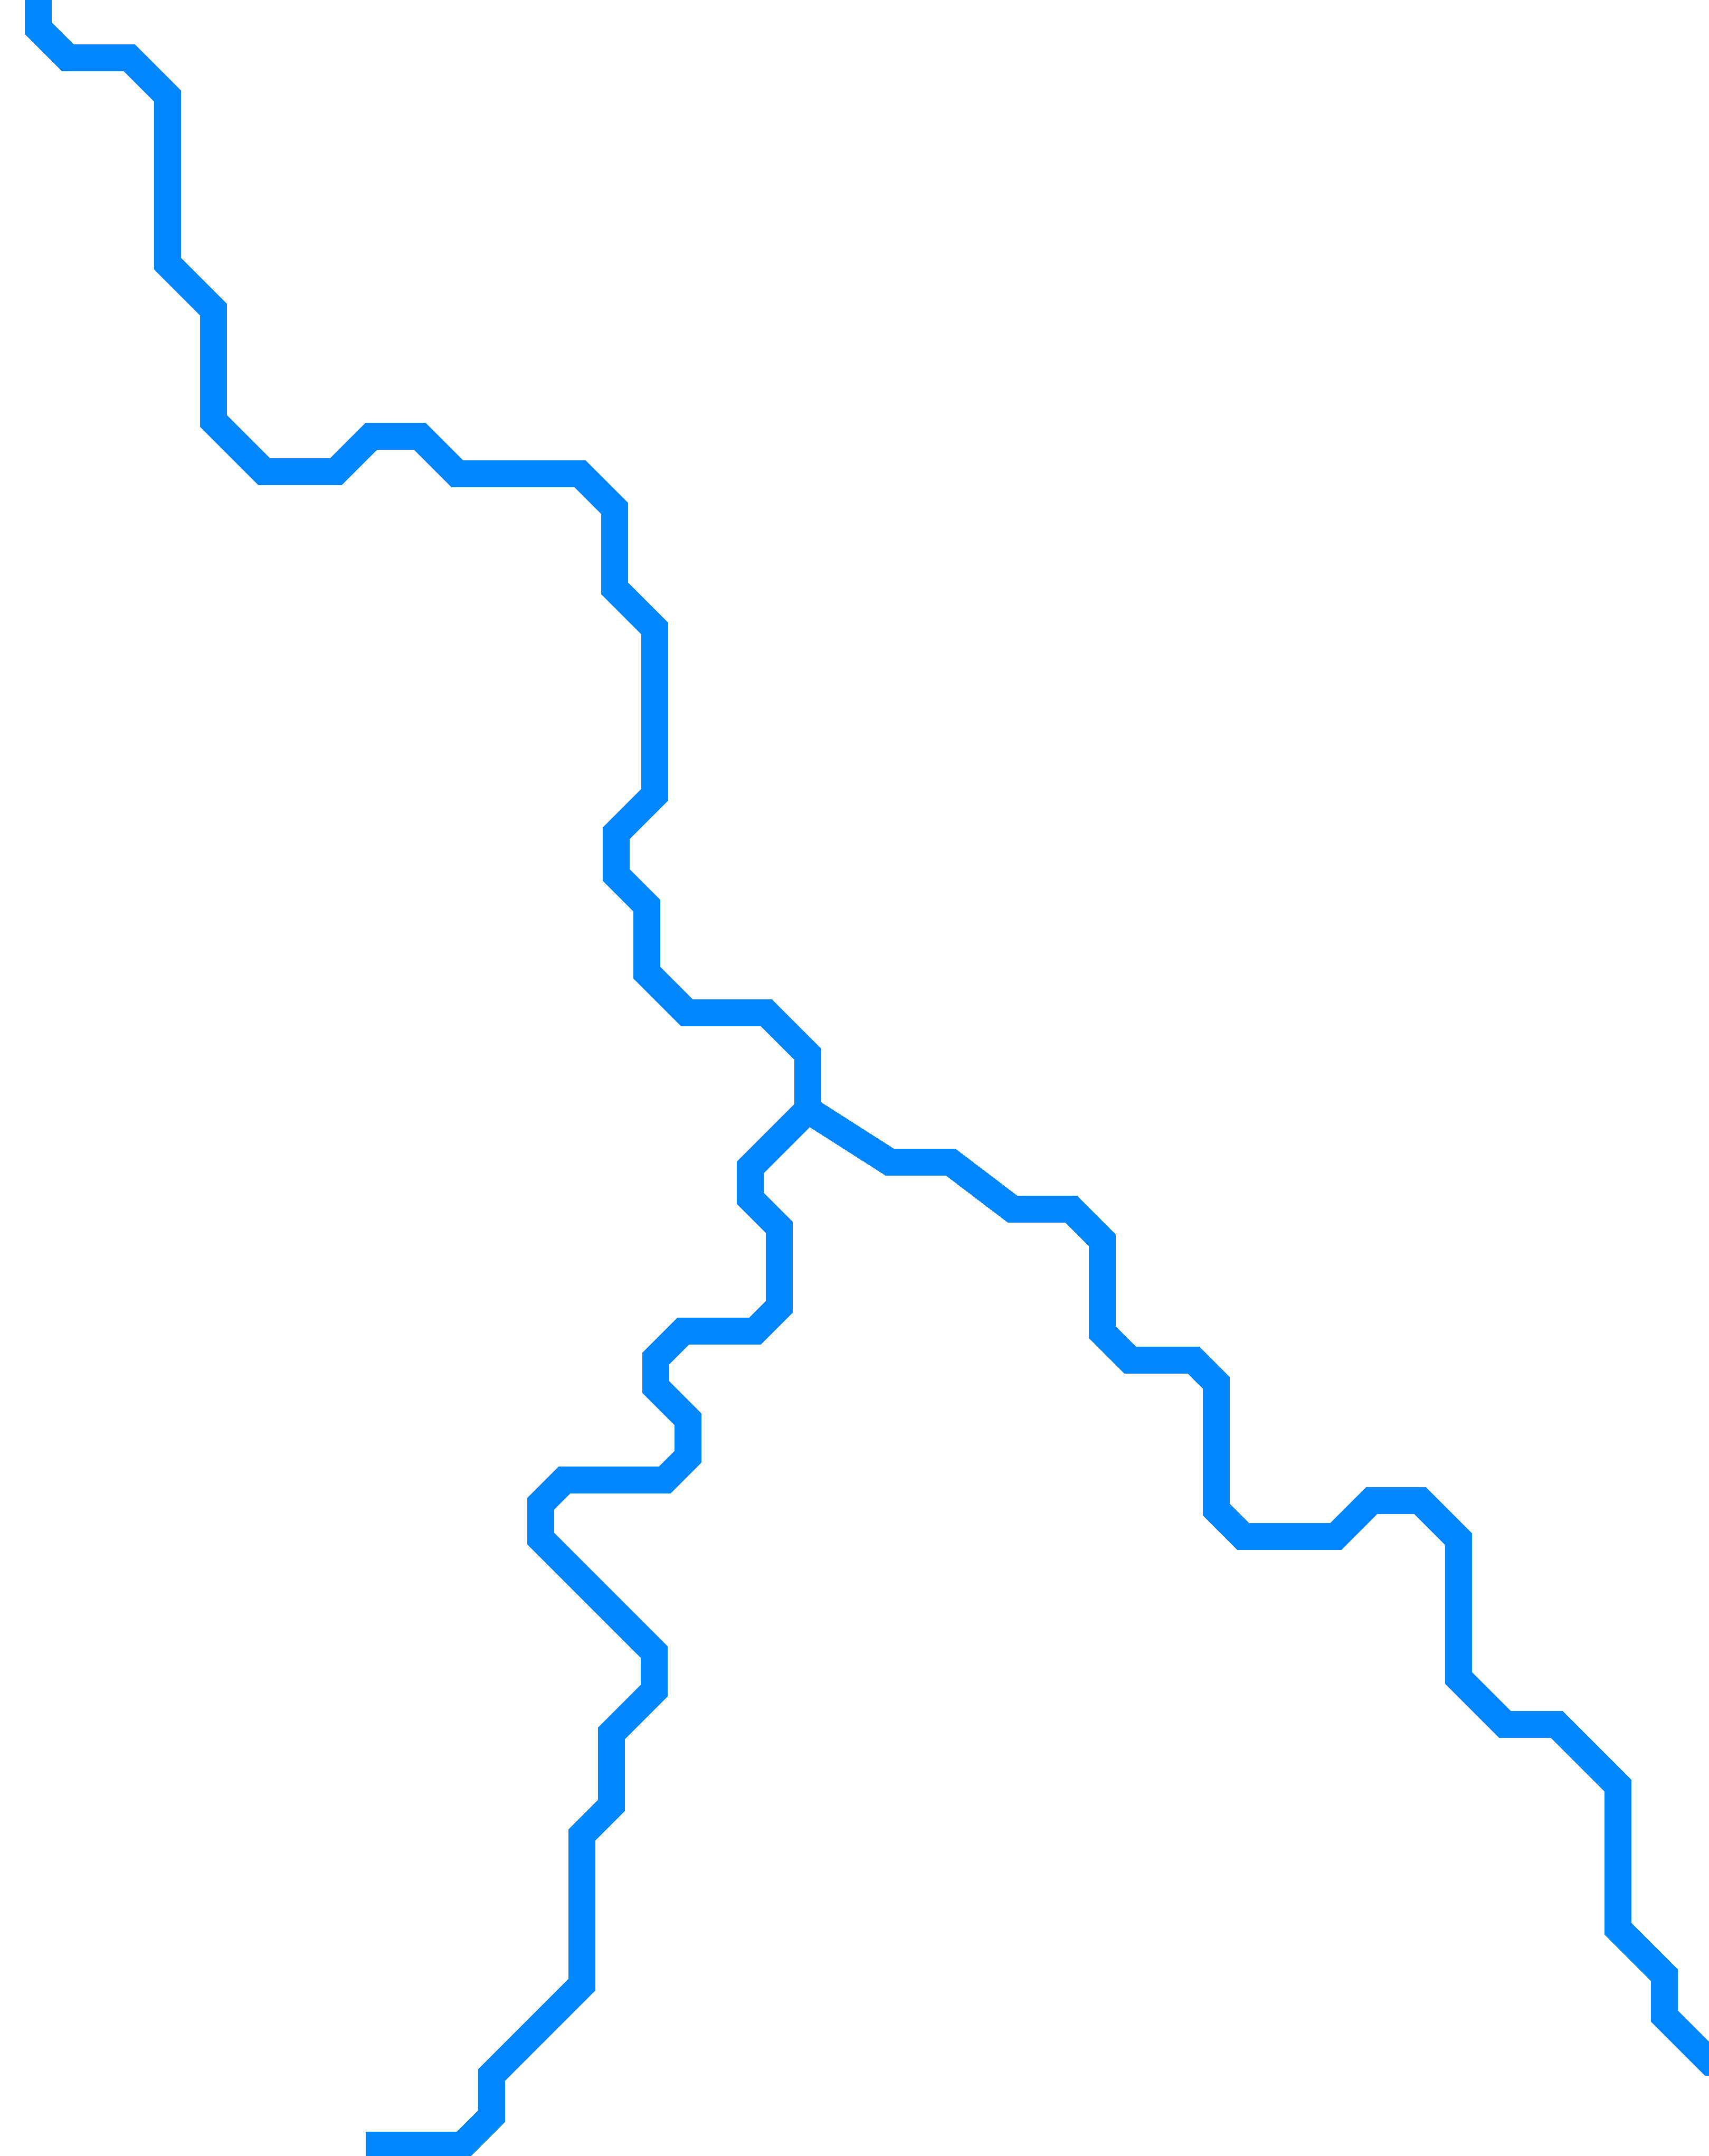 Illustration of a river